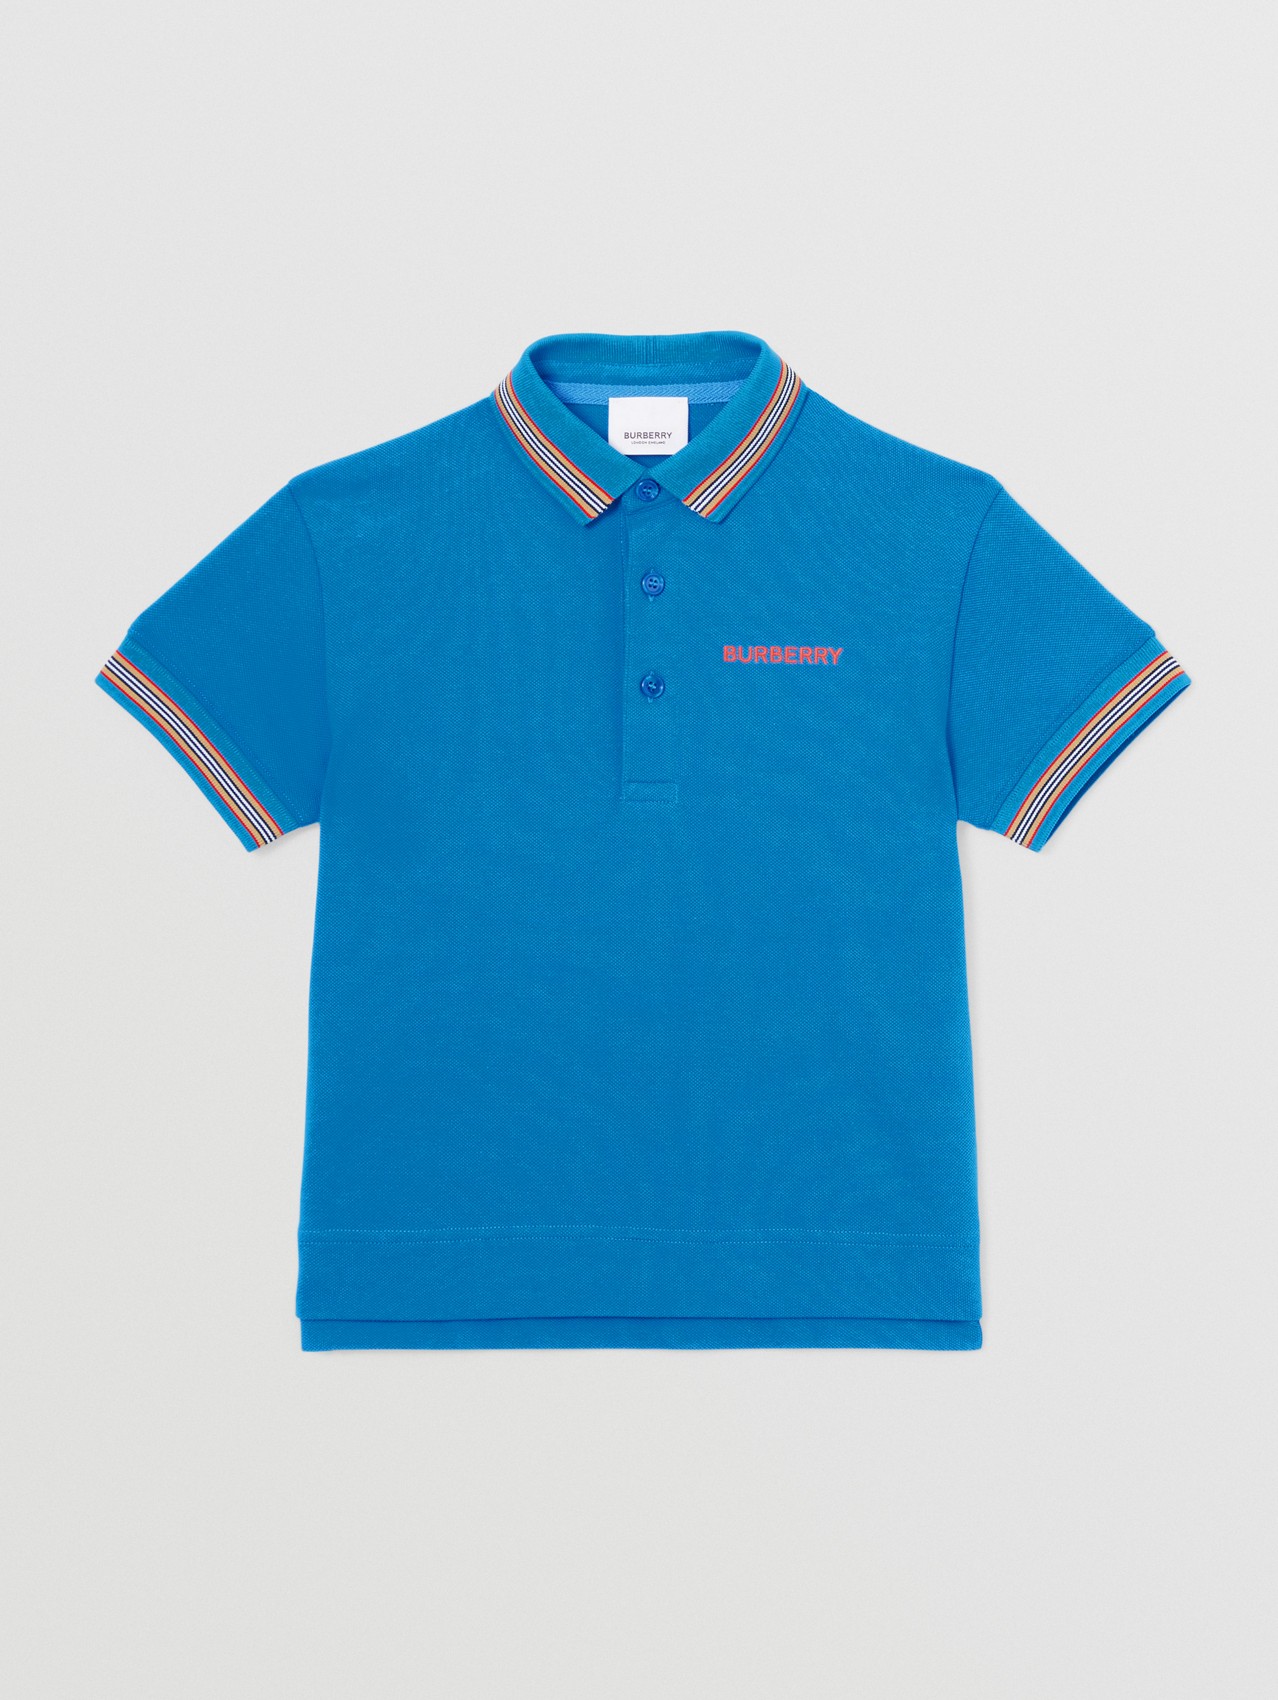 Cargo Bay Boys Logo Print Cotton Blend Polo T-Shirt with Contrasting Stripes 